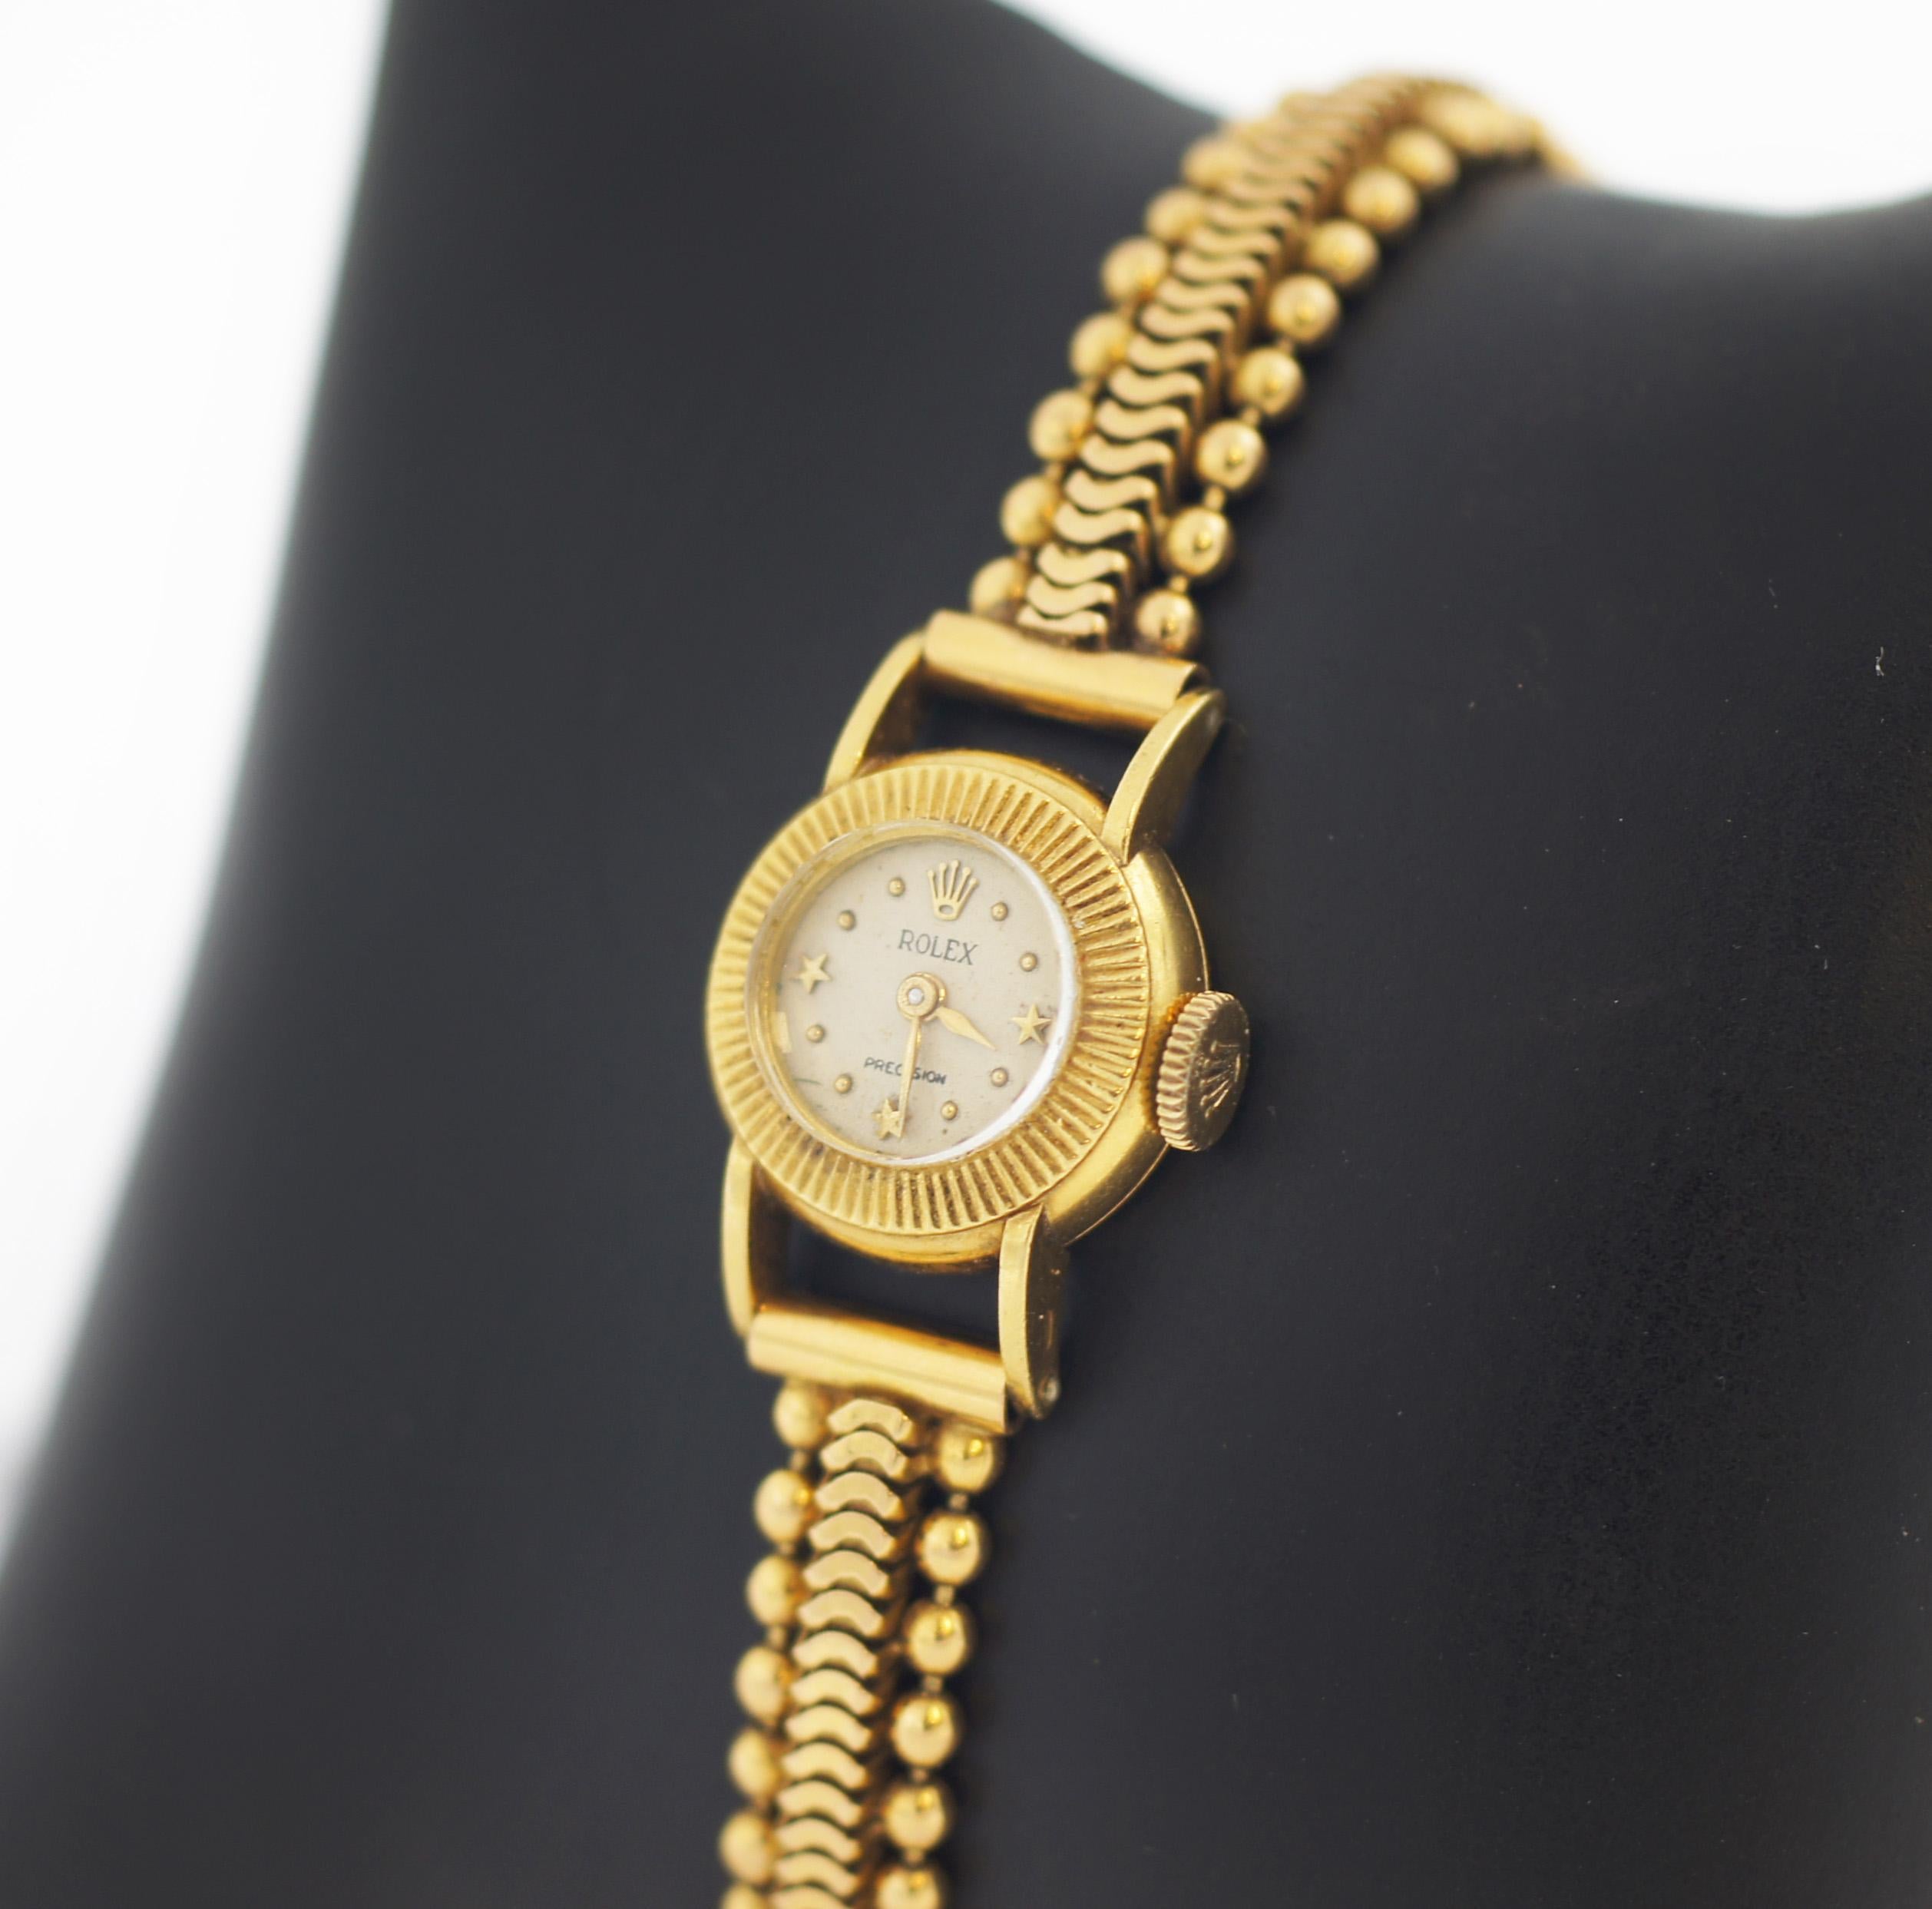 Rolex 18K Gold Vintage Precision Mechanical Movement Watch 4